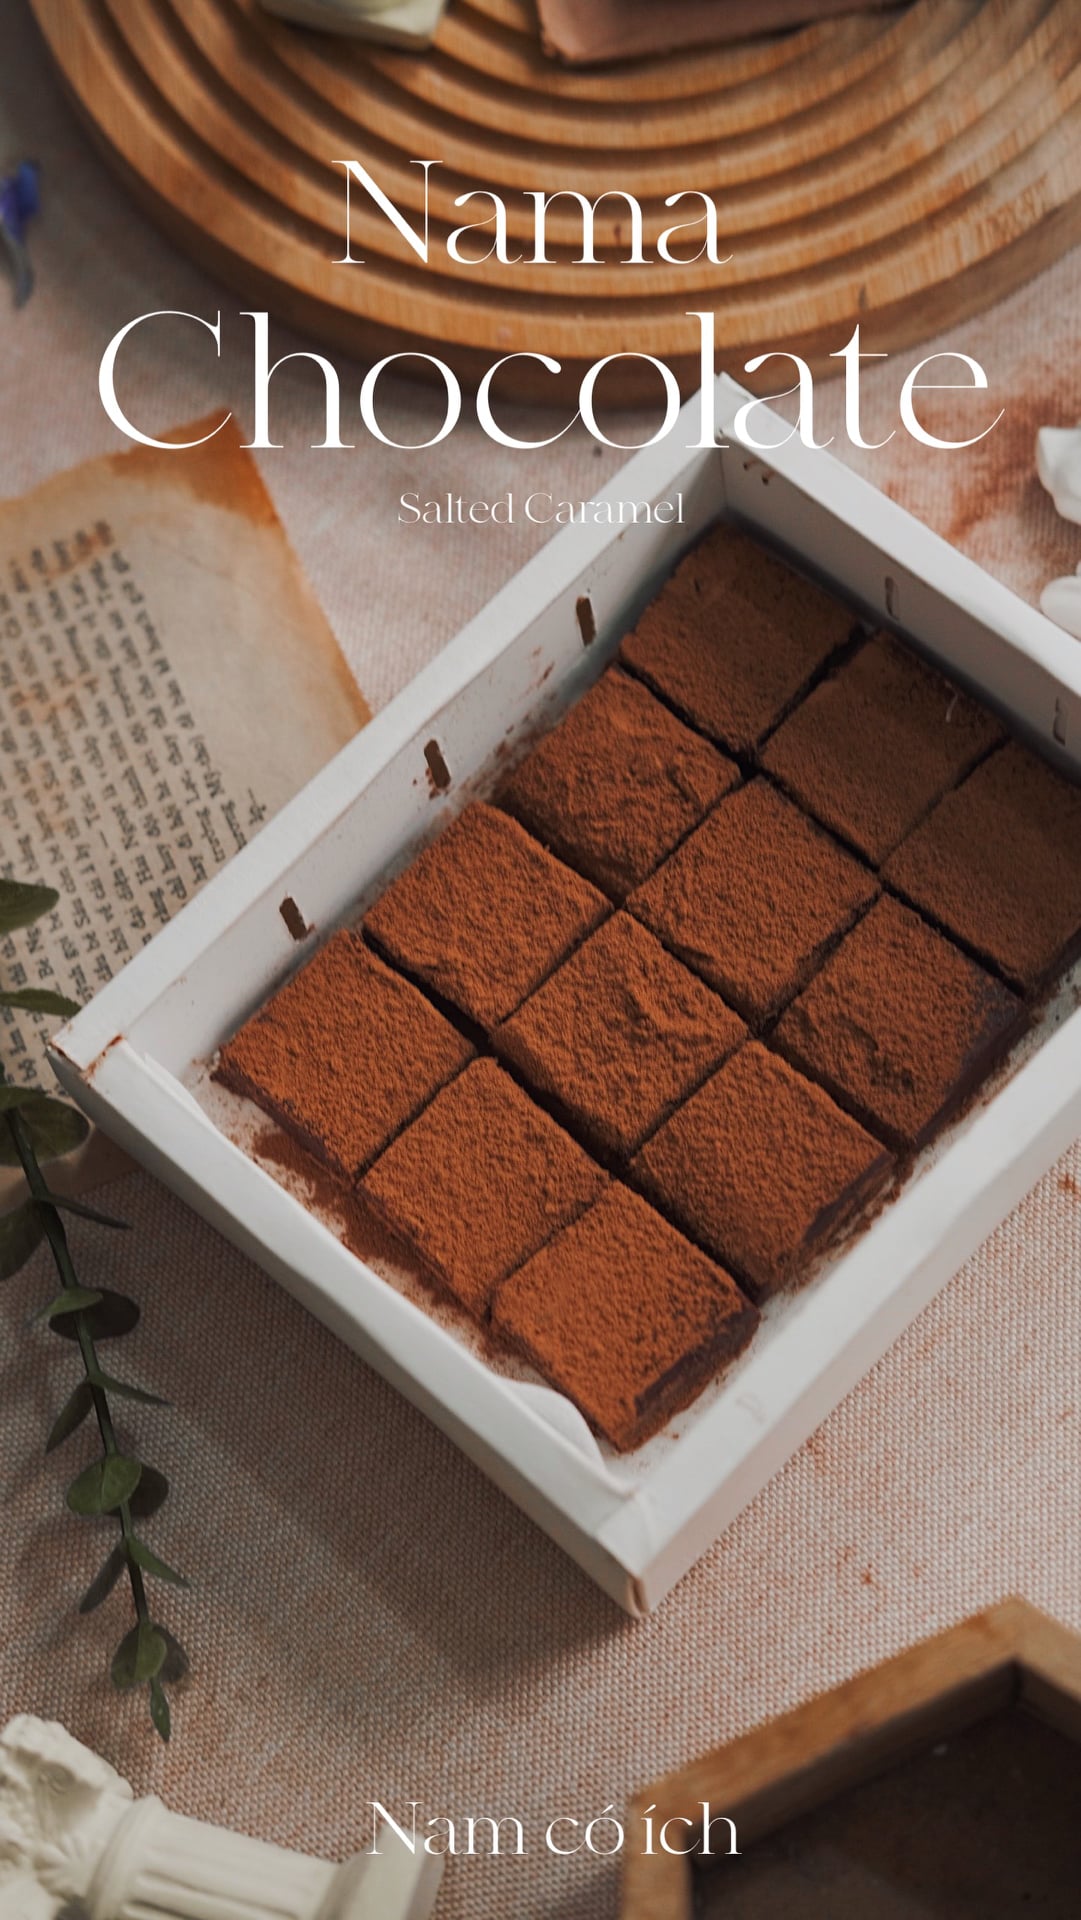 Bài viết bán socola Valentine - Nama Chocolate